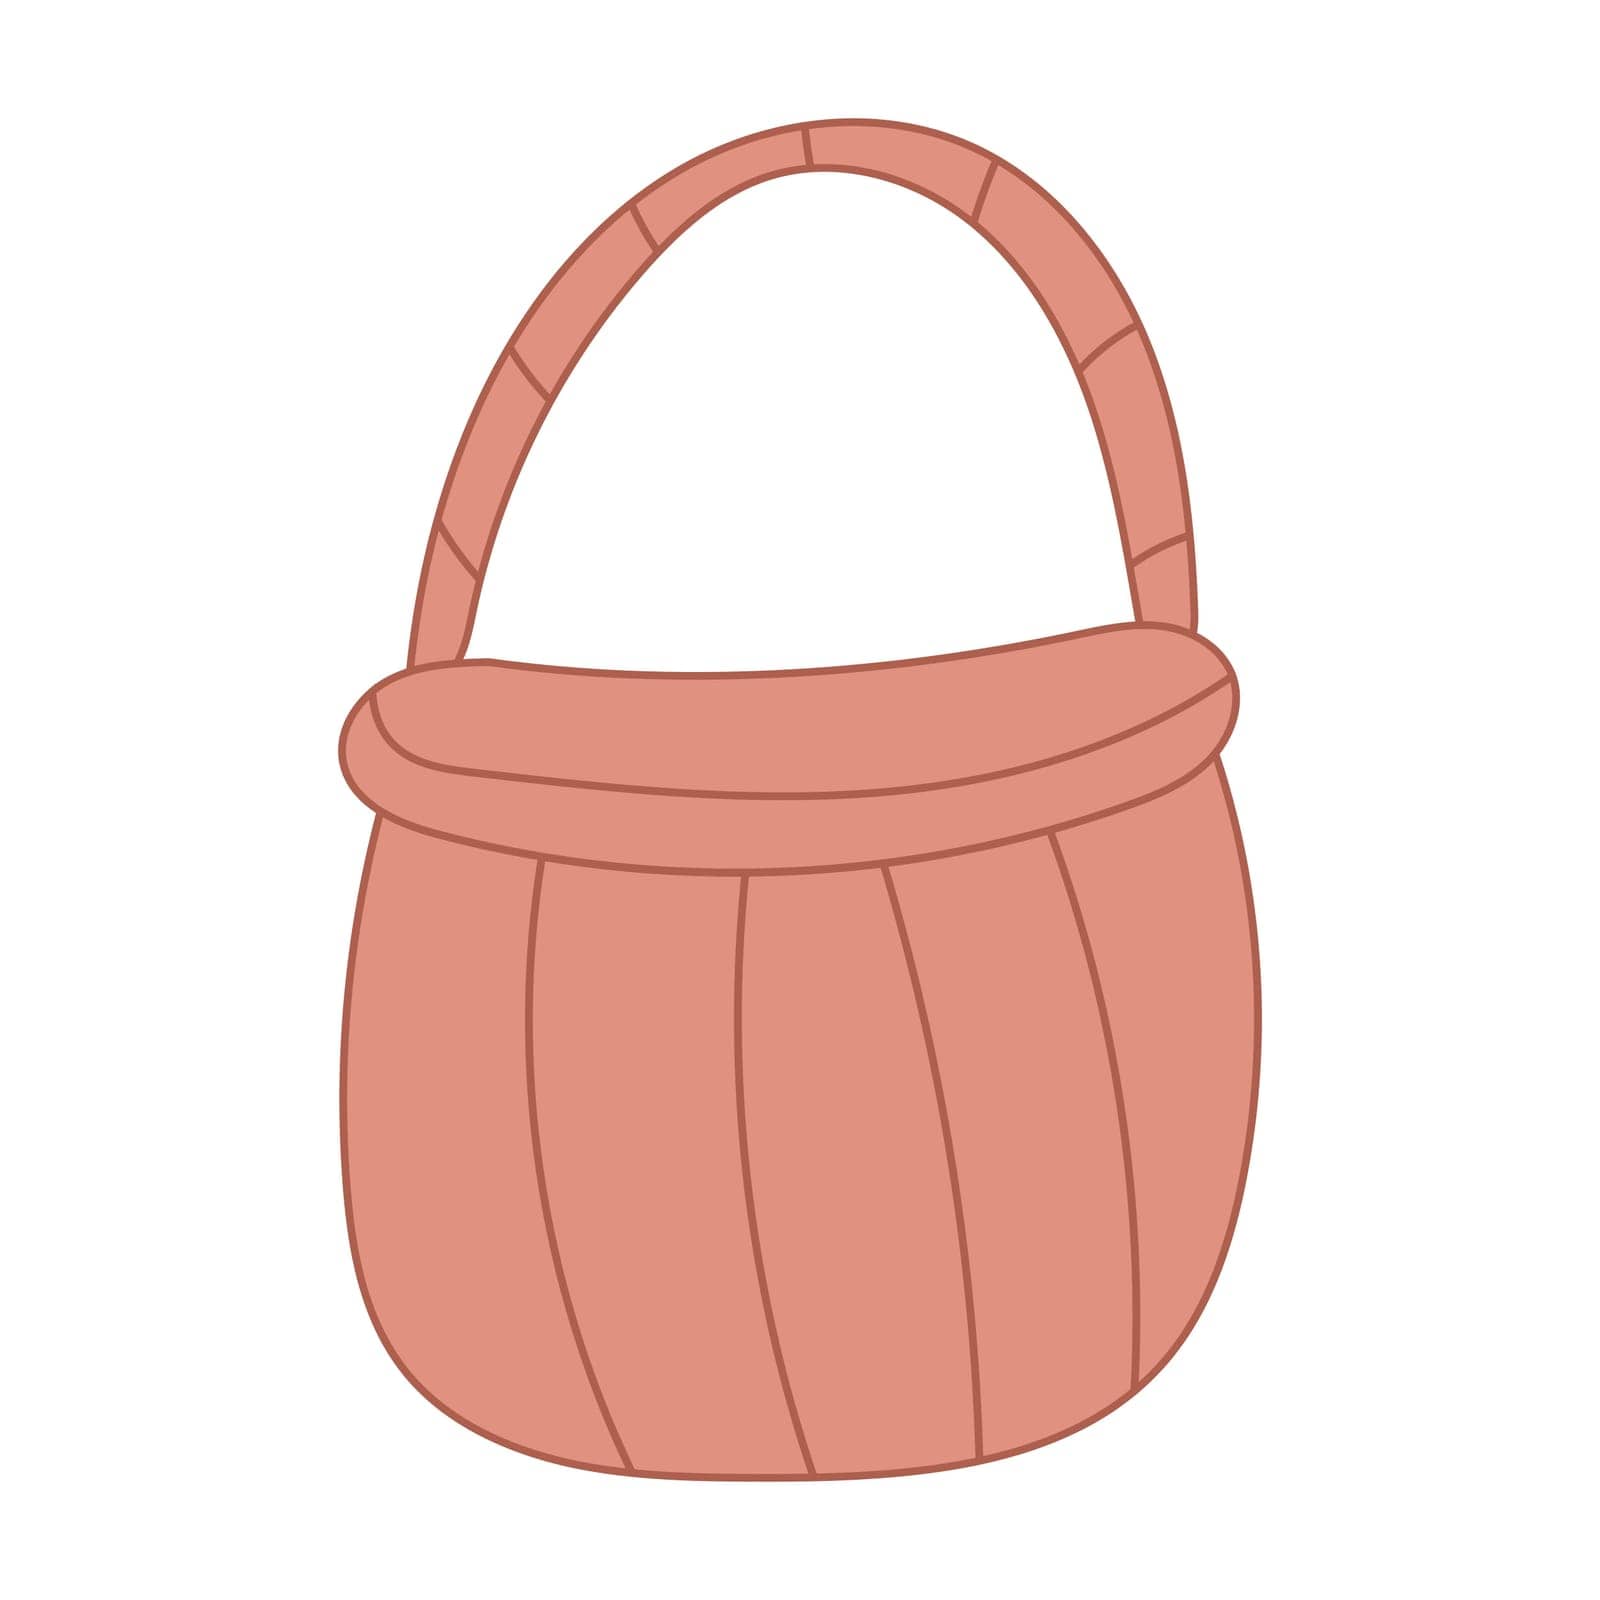 easter wicker basket hunting eggs icon element by kristushka_15_108